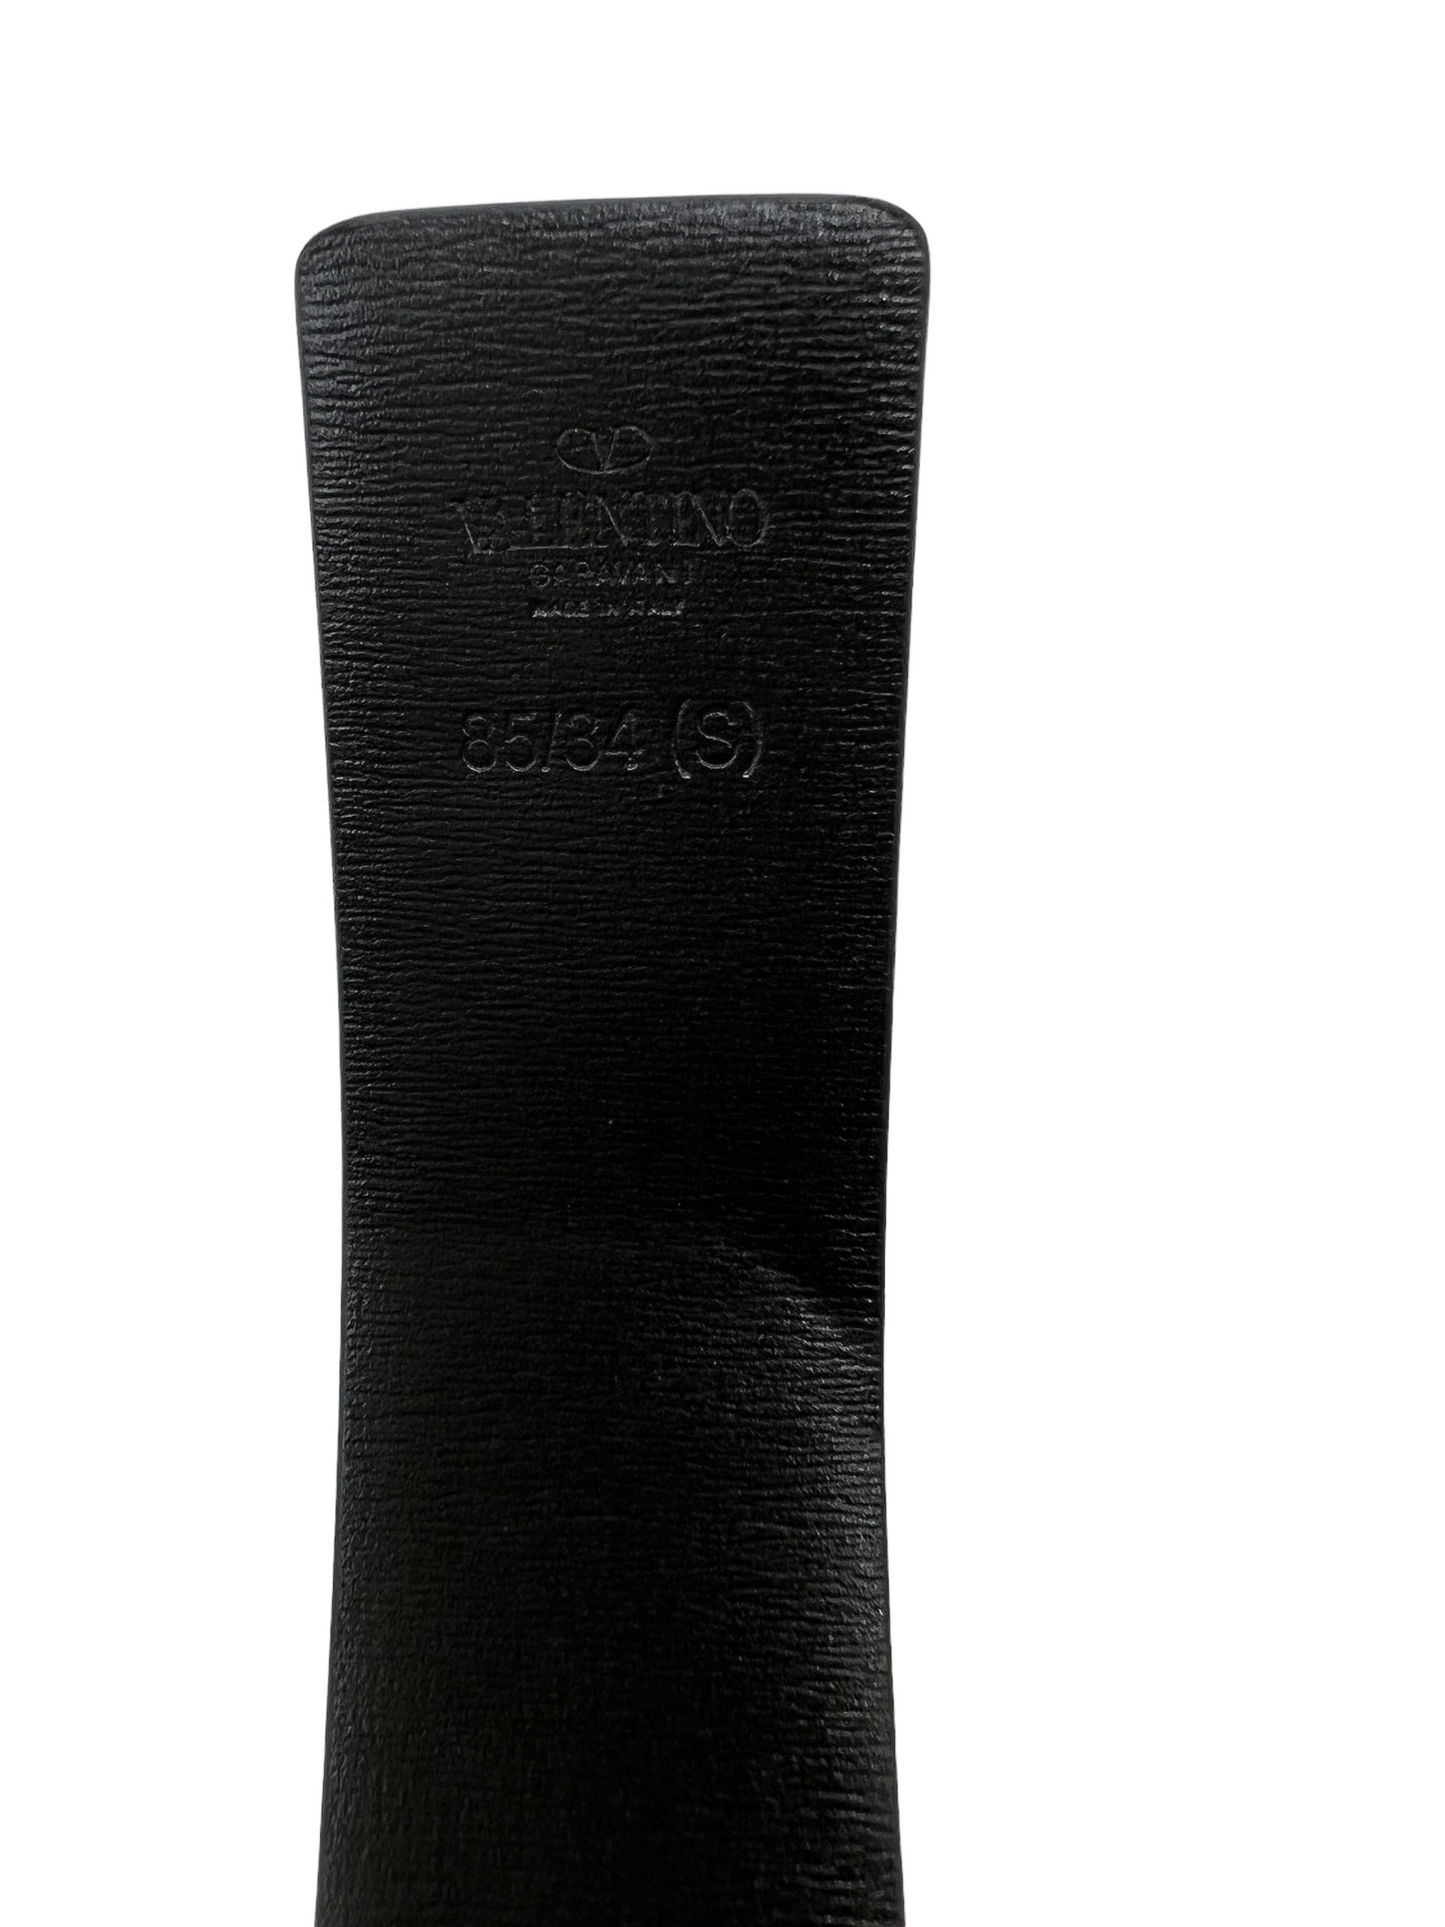 Valentino Tan Leather Reversible Vlogo Size 85 Belt